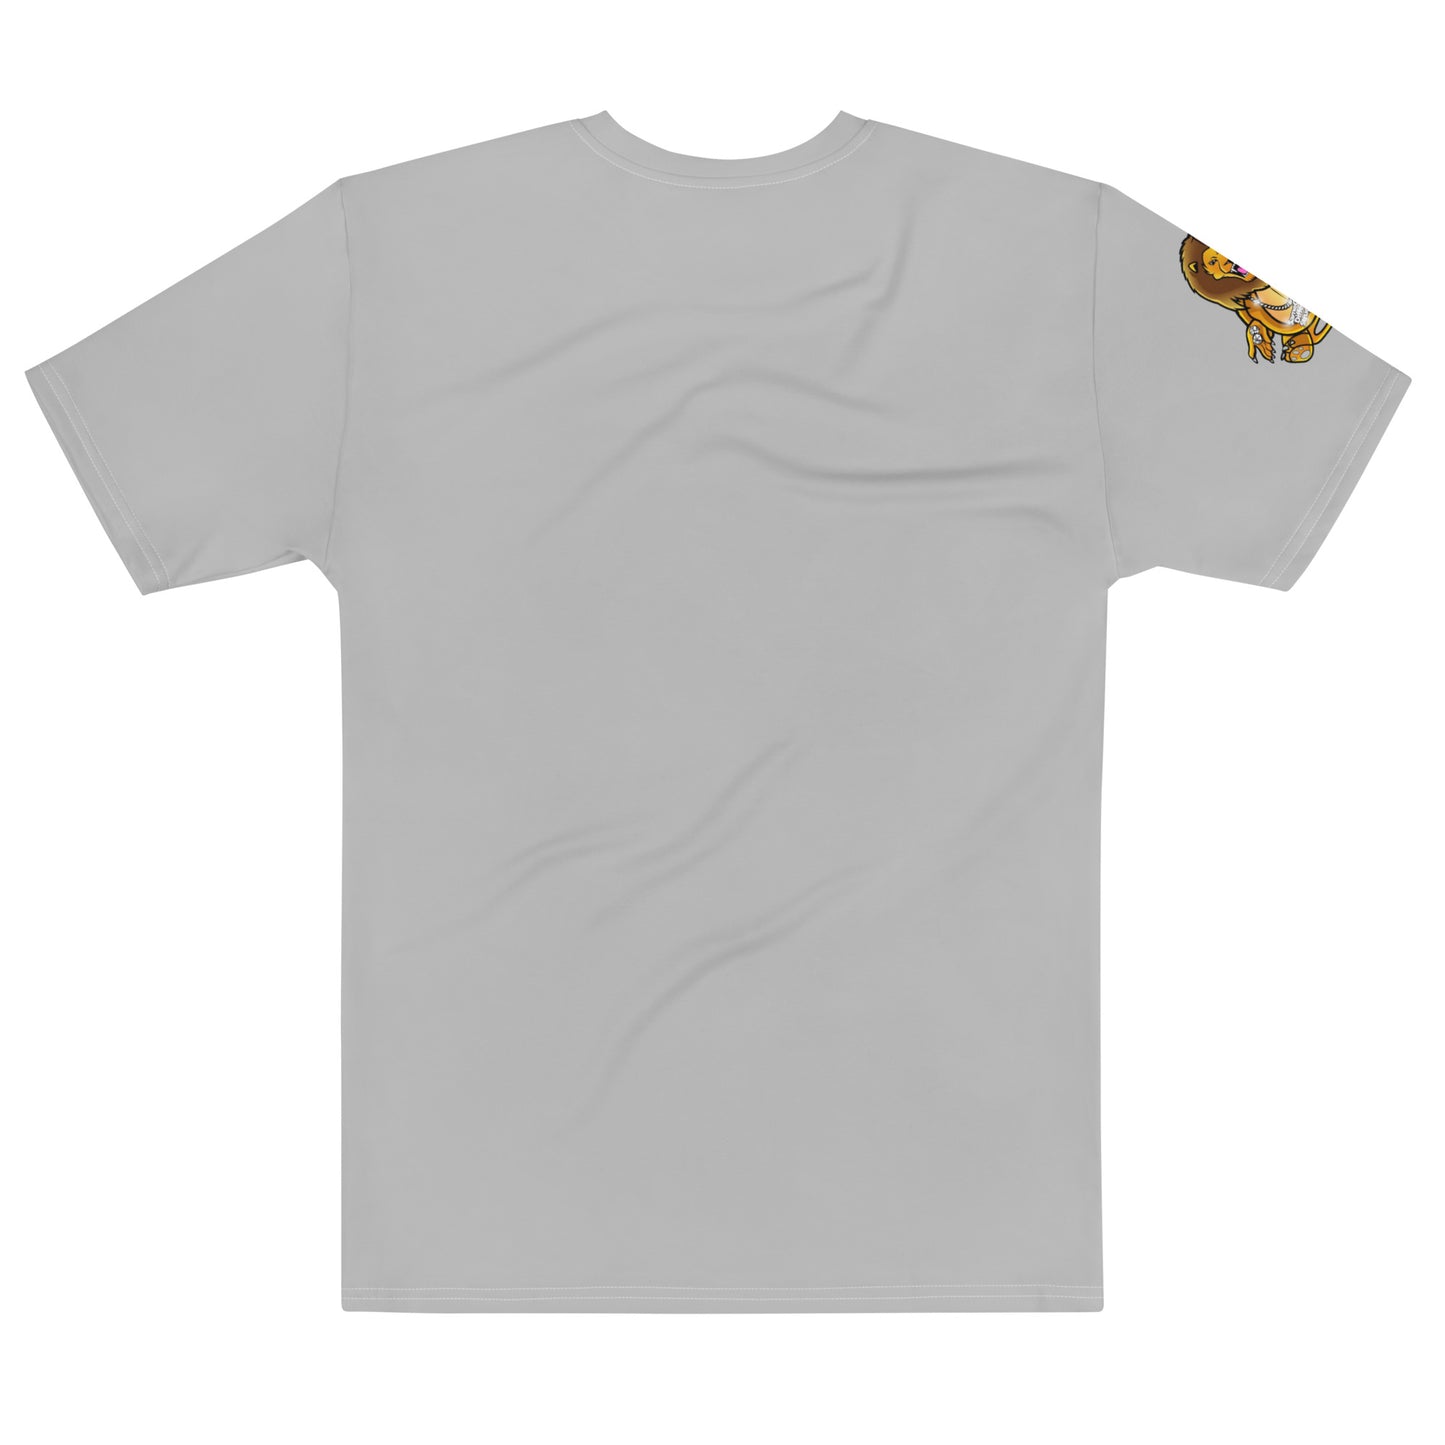 SGDS Men's t-shirt